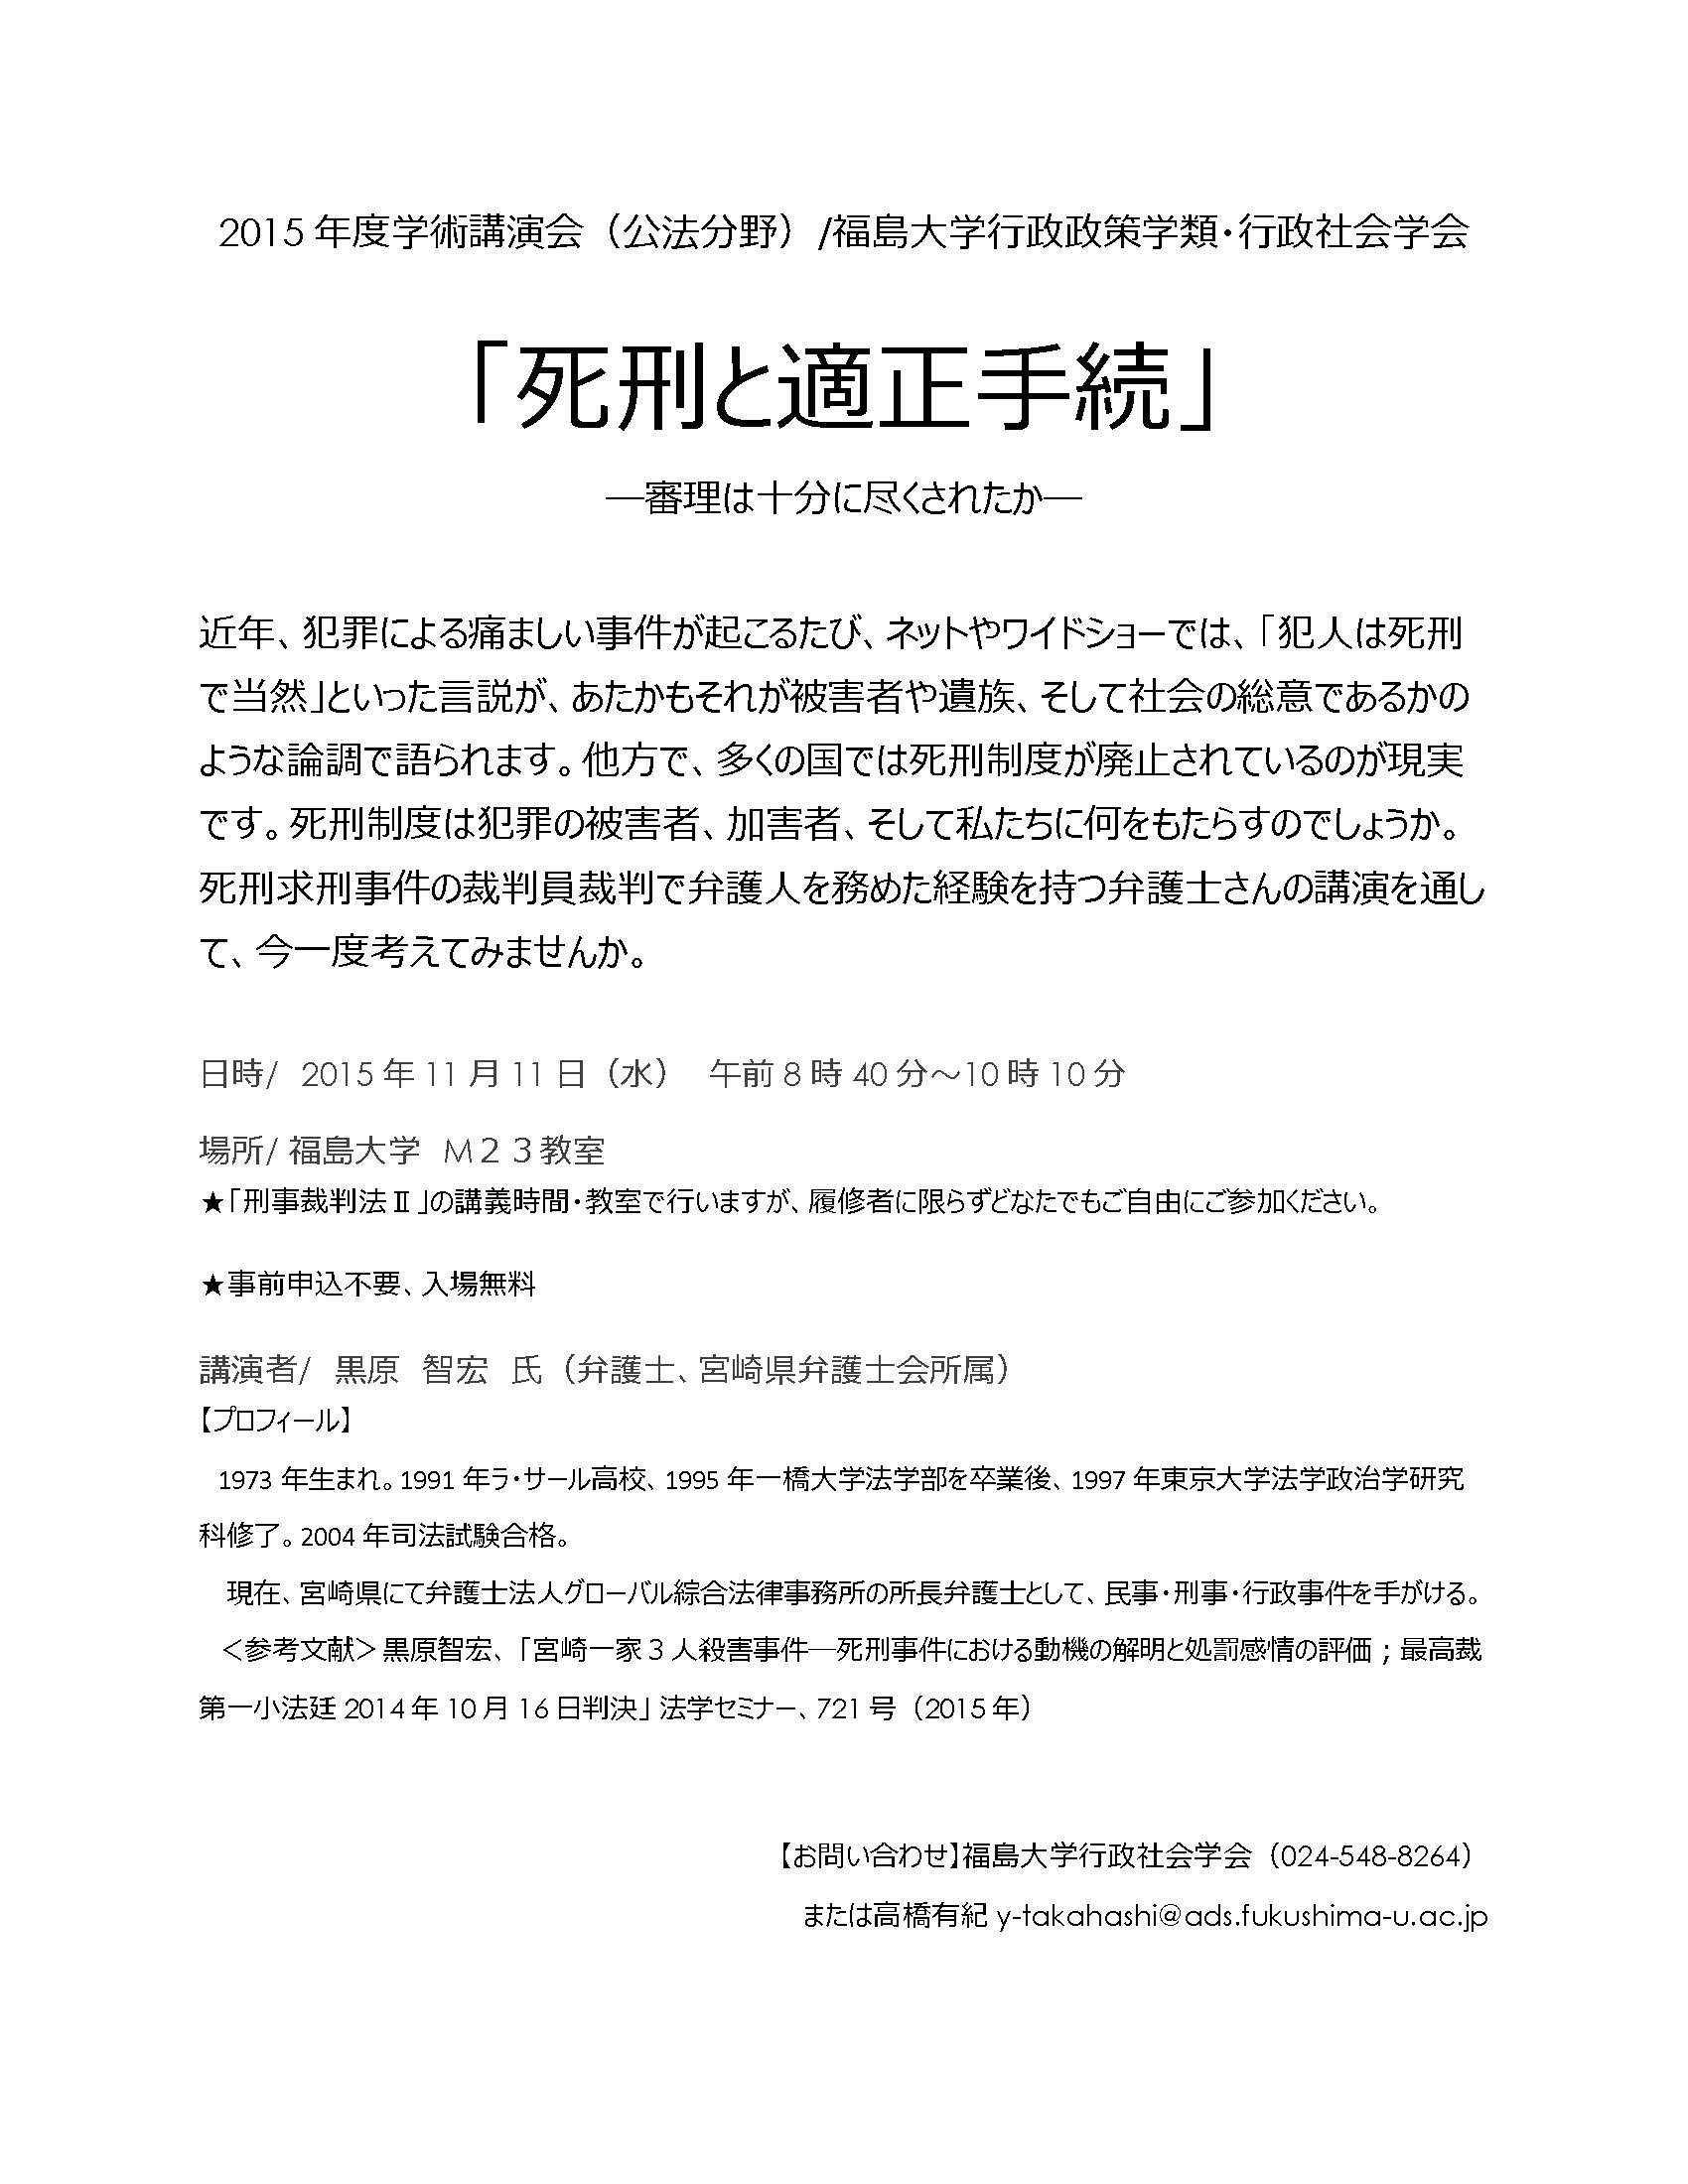 http://www.ads.fukushima-u.ac.jp/topix/Files/2015/10/15/20151111kouhou.jpg